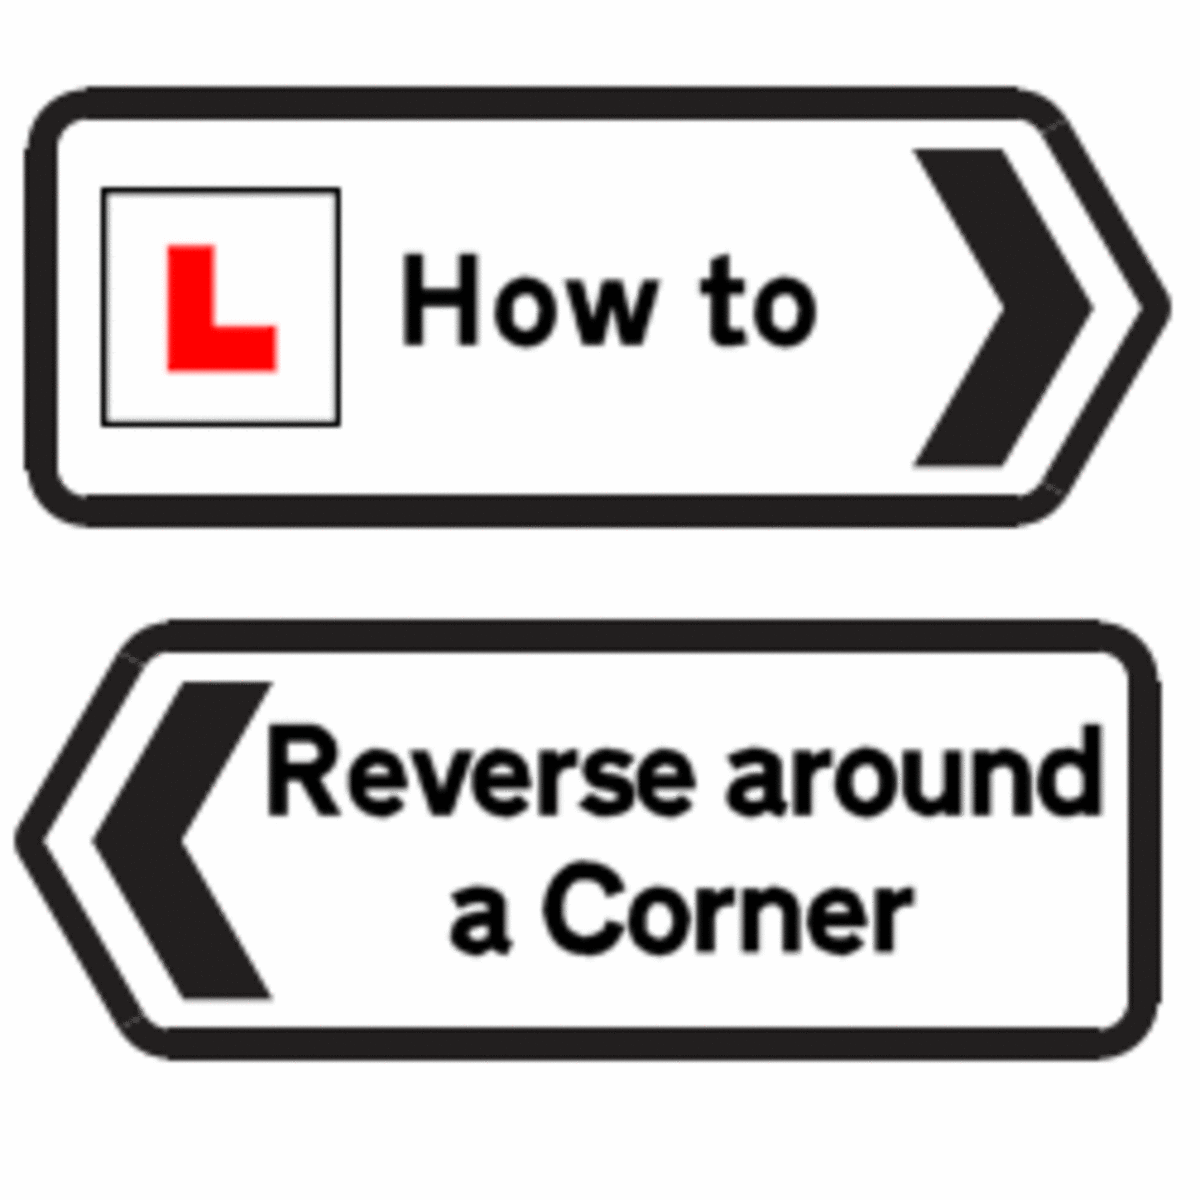 How to Reverse Around a Corner